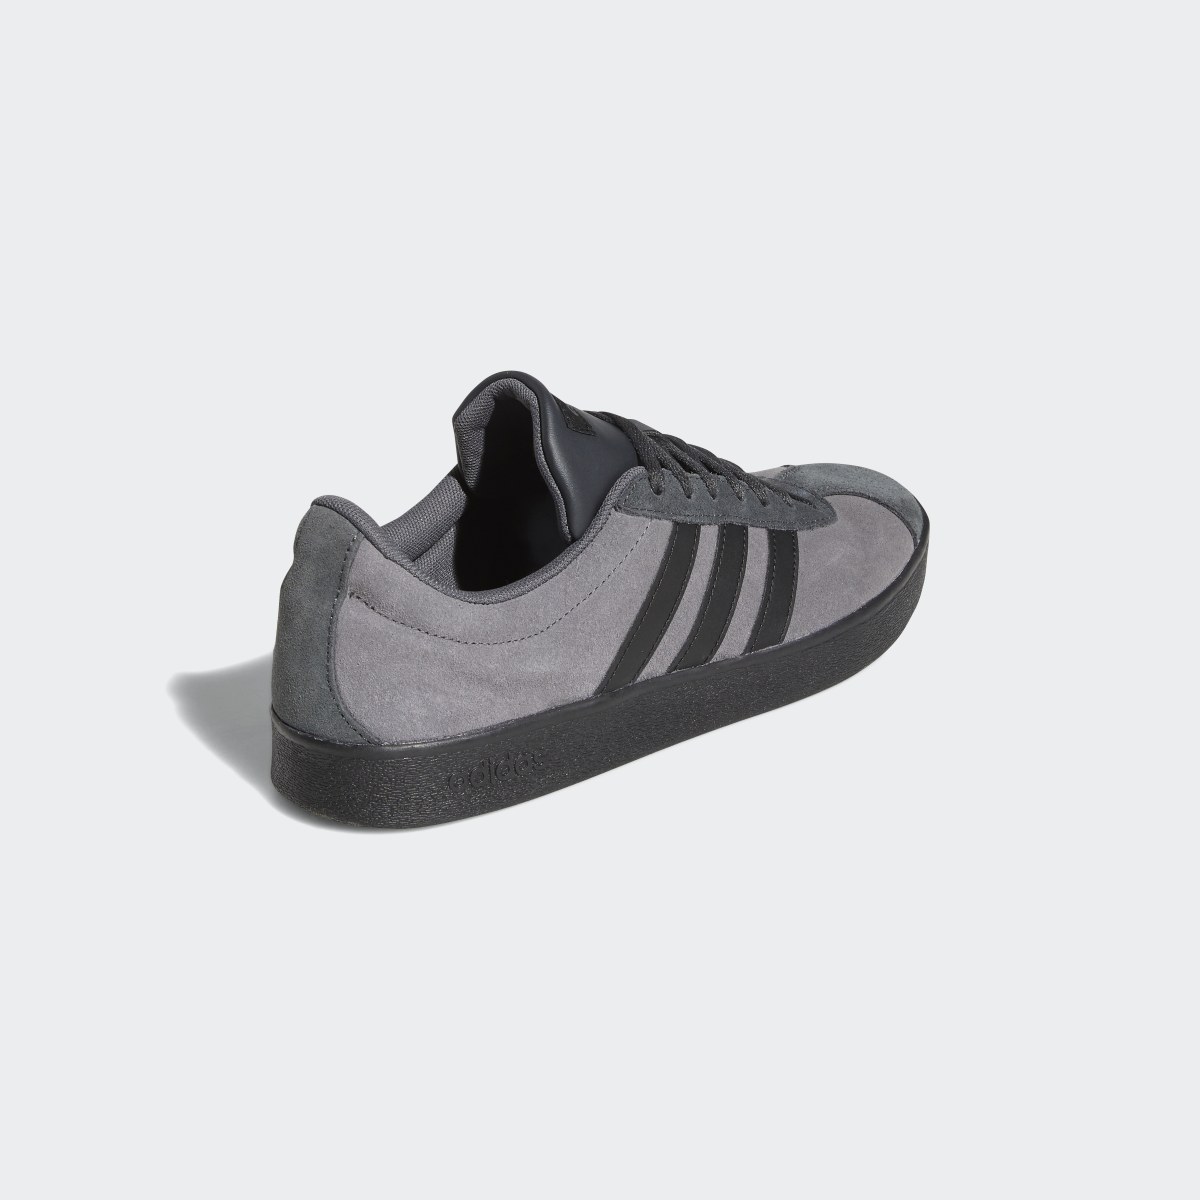 Adidas VL Court 2.0 Shoes. 6